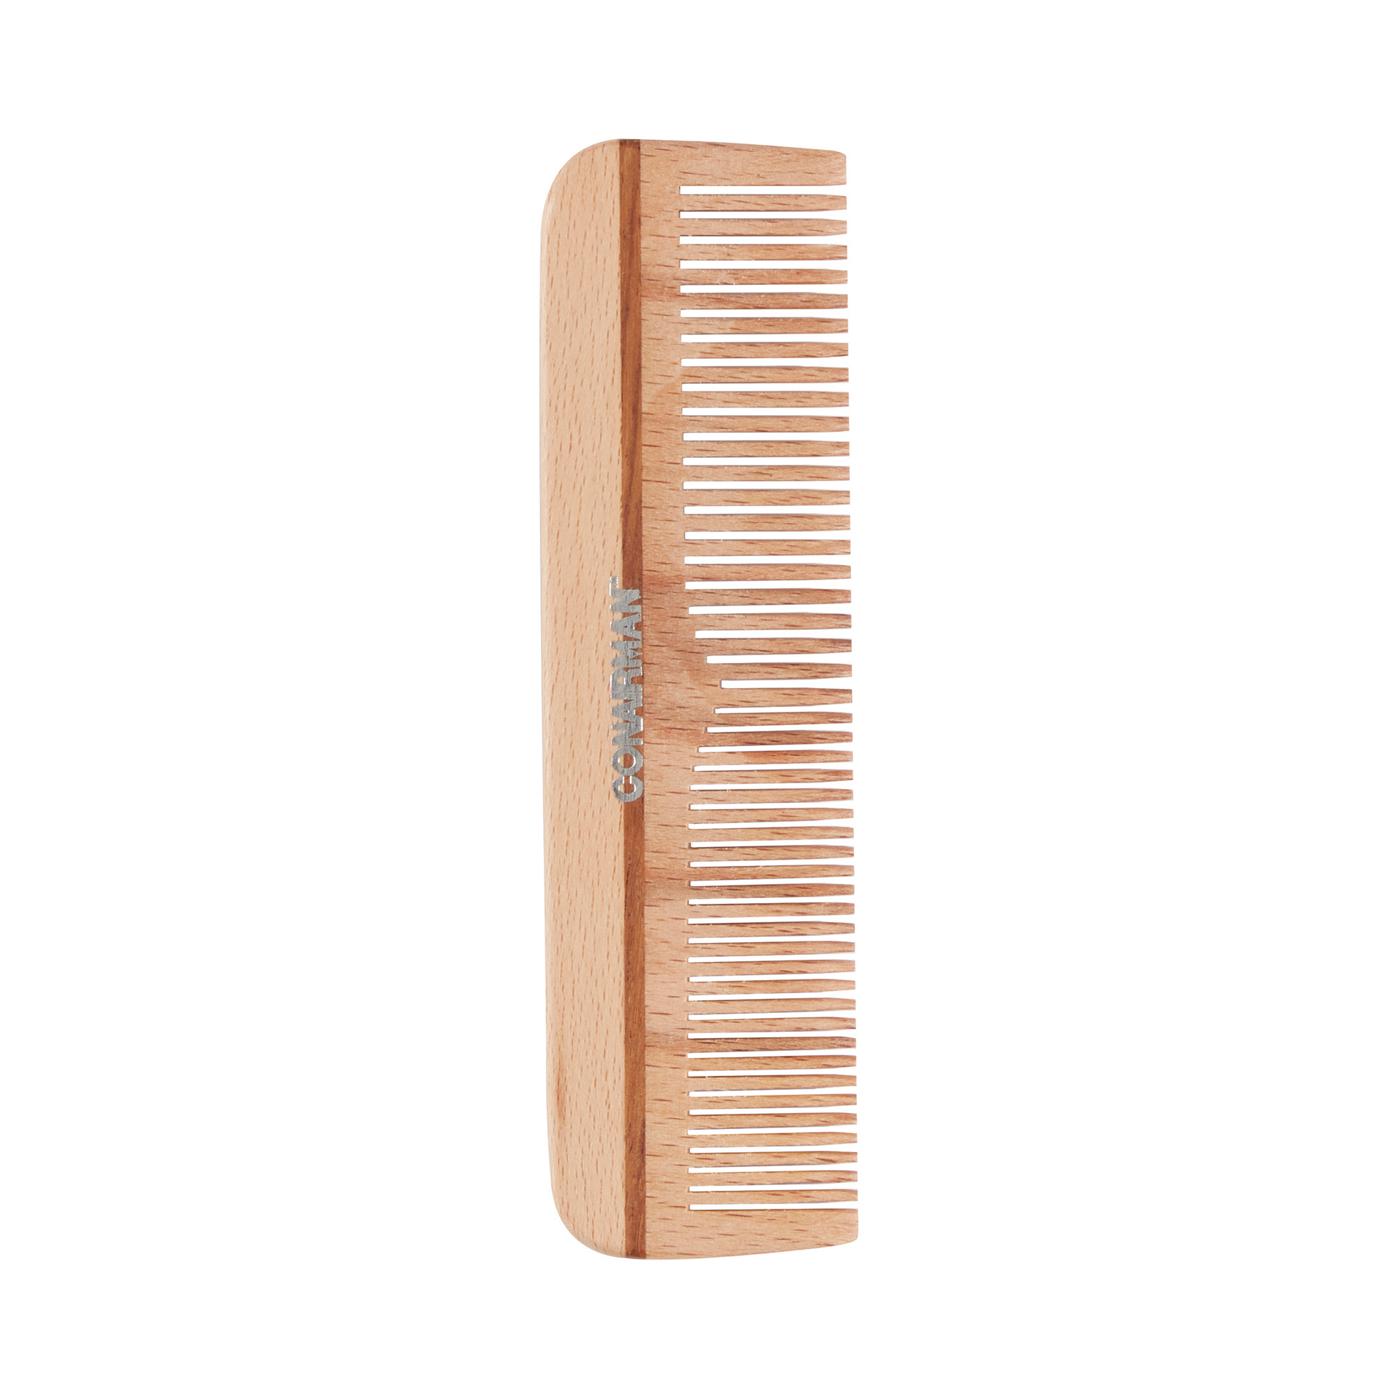 Conair Man Wooden Pocket Comb; image 2 of 2